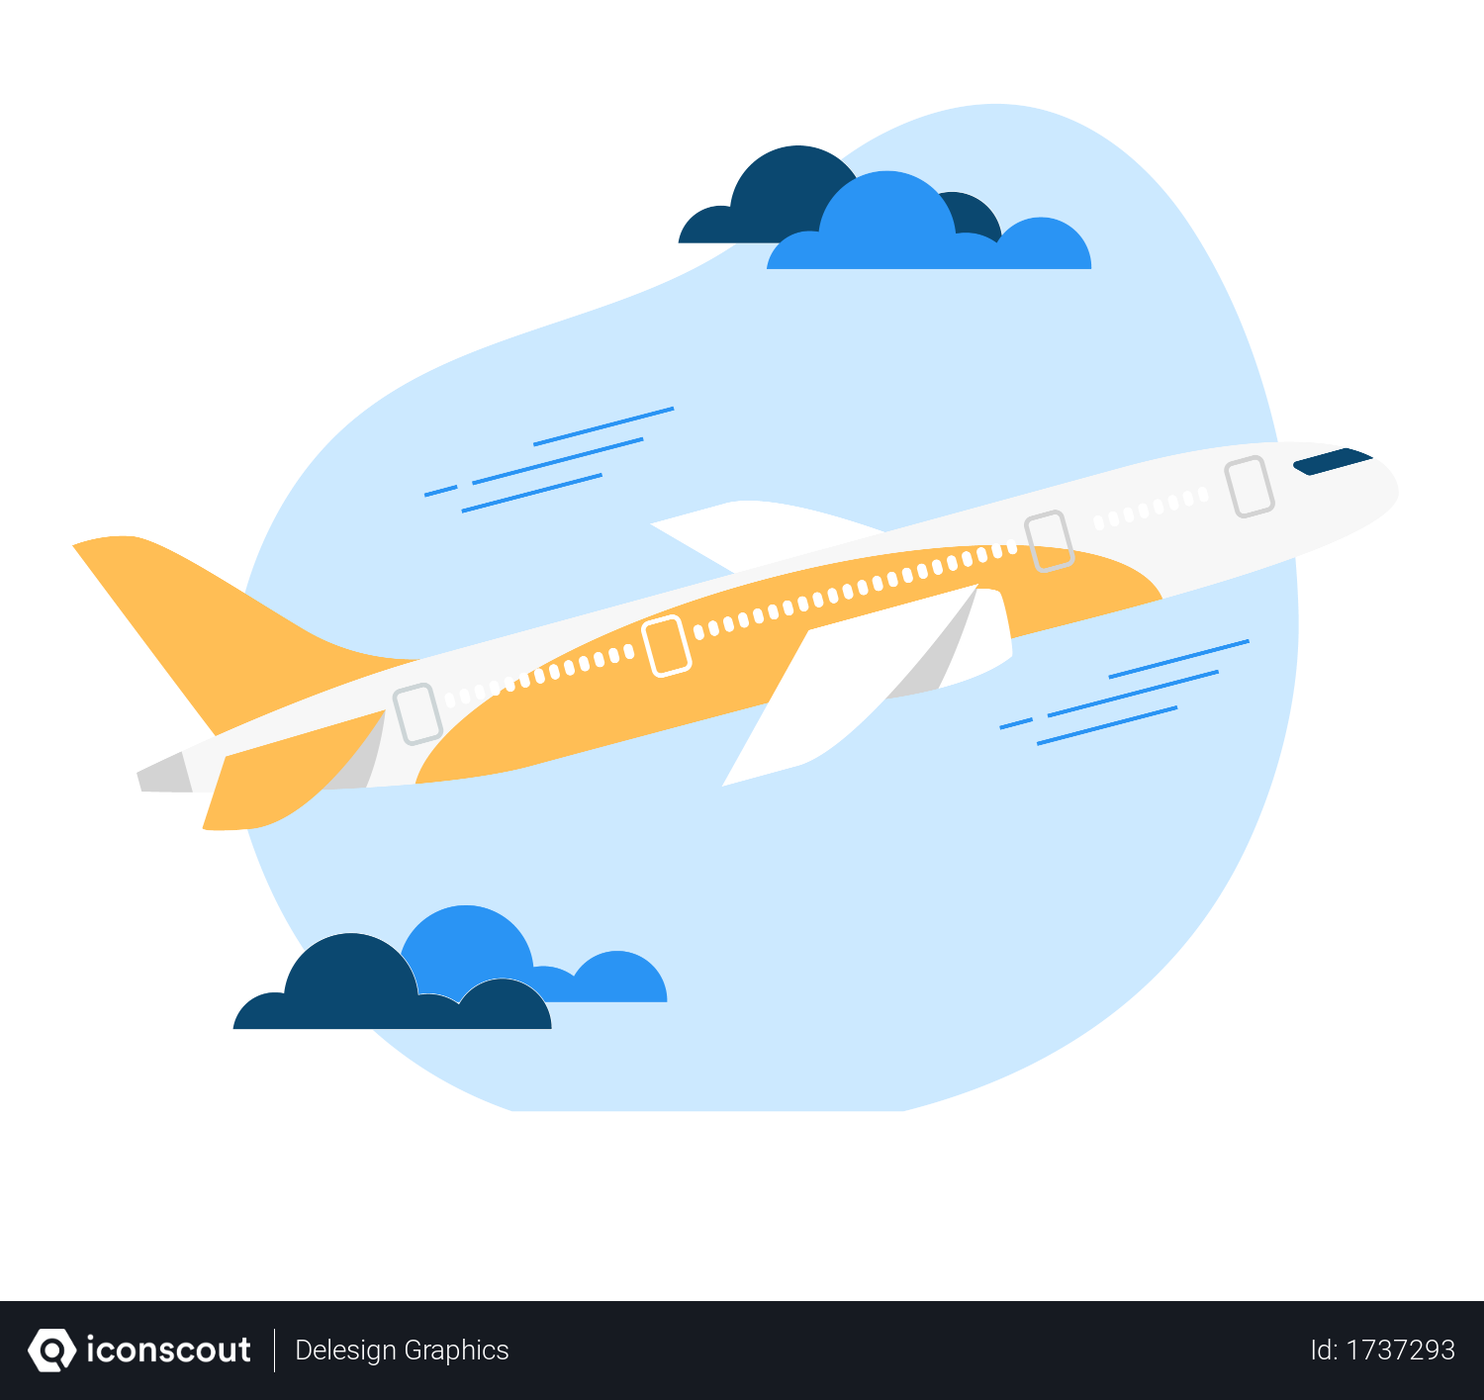 Best Free Flight Illustration download in PNG & Vector format